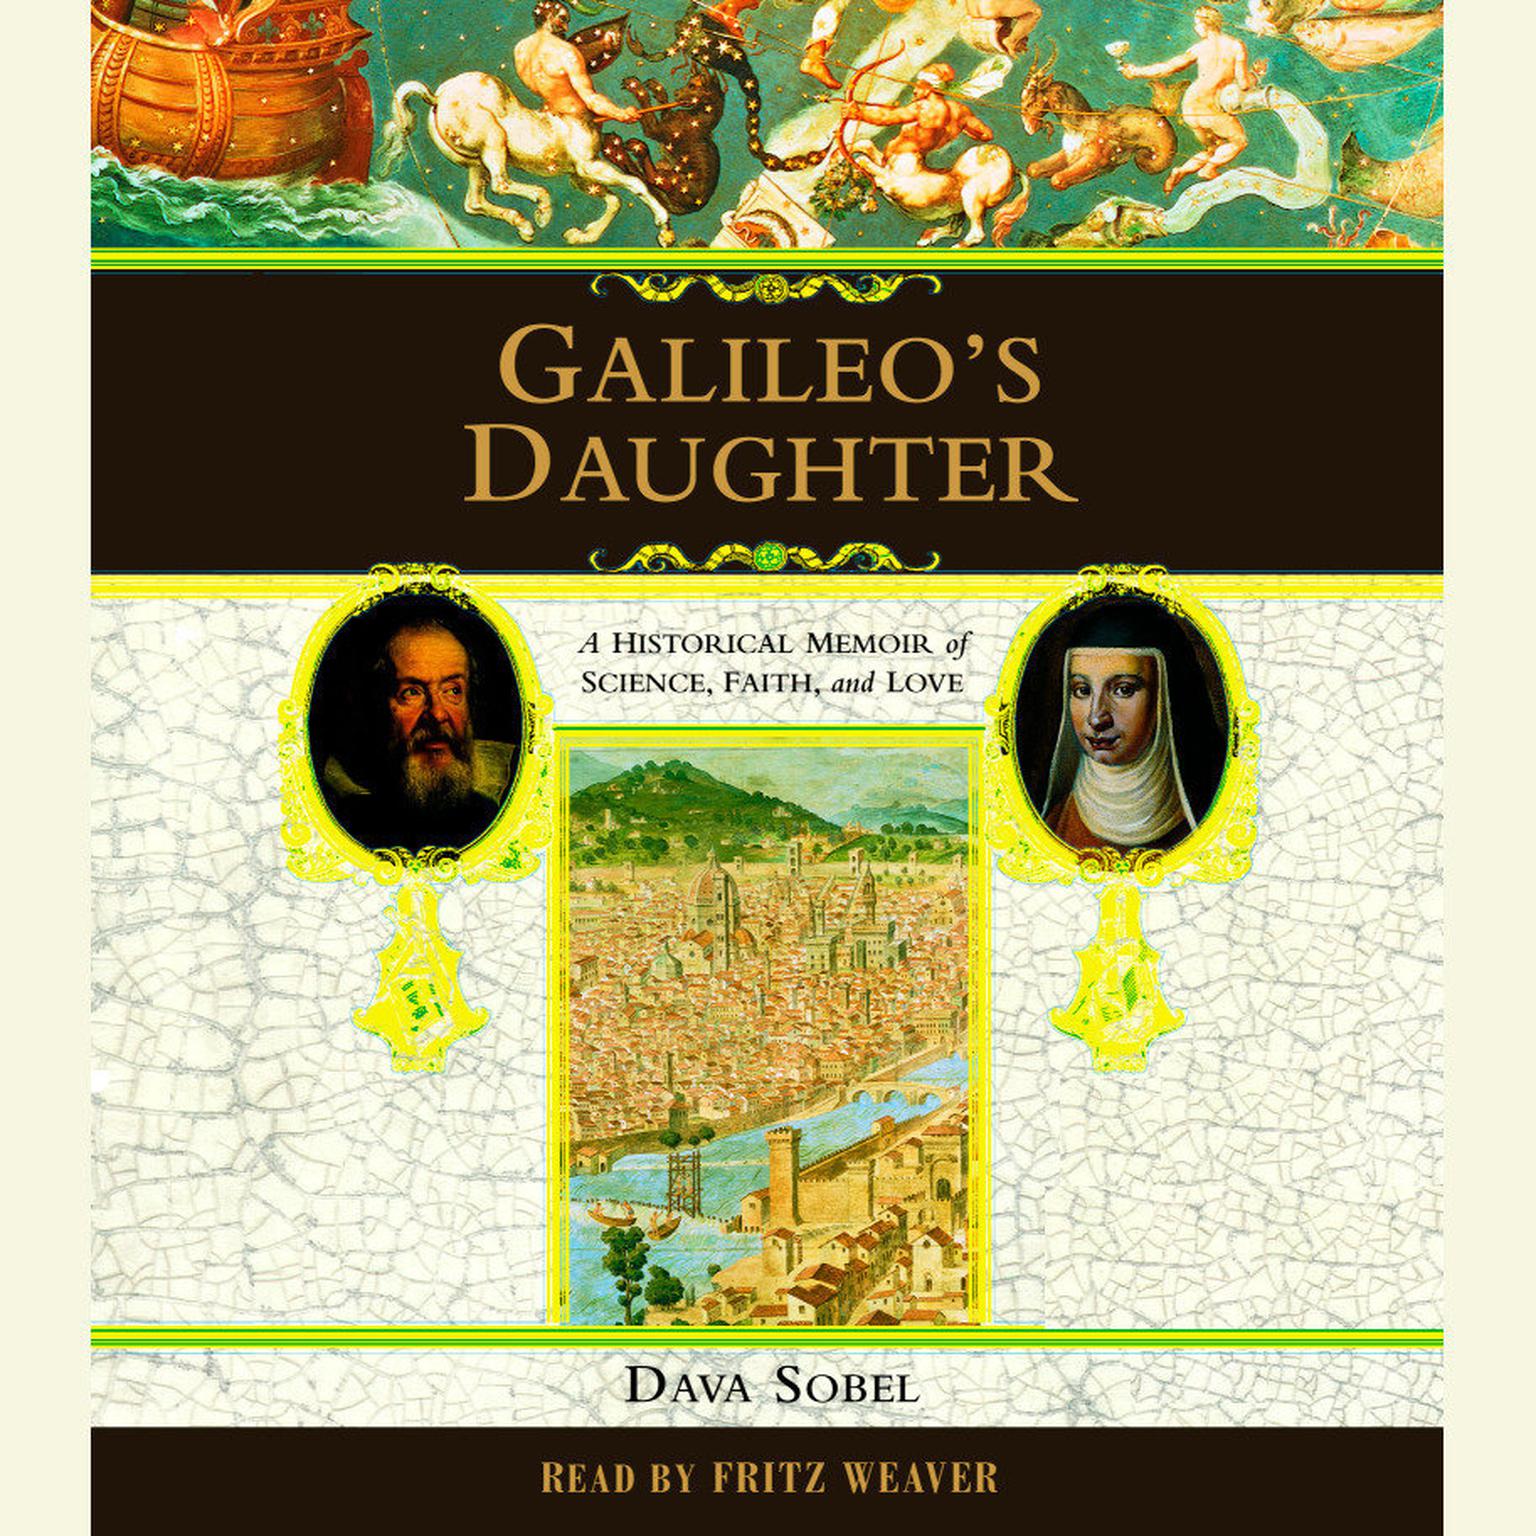 Galileos Daughter (Abridged): A Historical Memoir of Science, Faith and Love Audiobook, by Dava Sobel